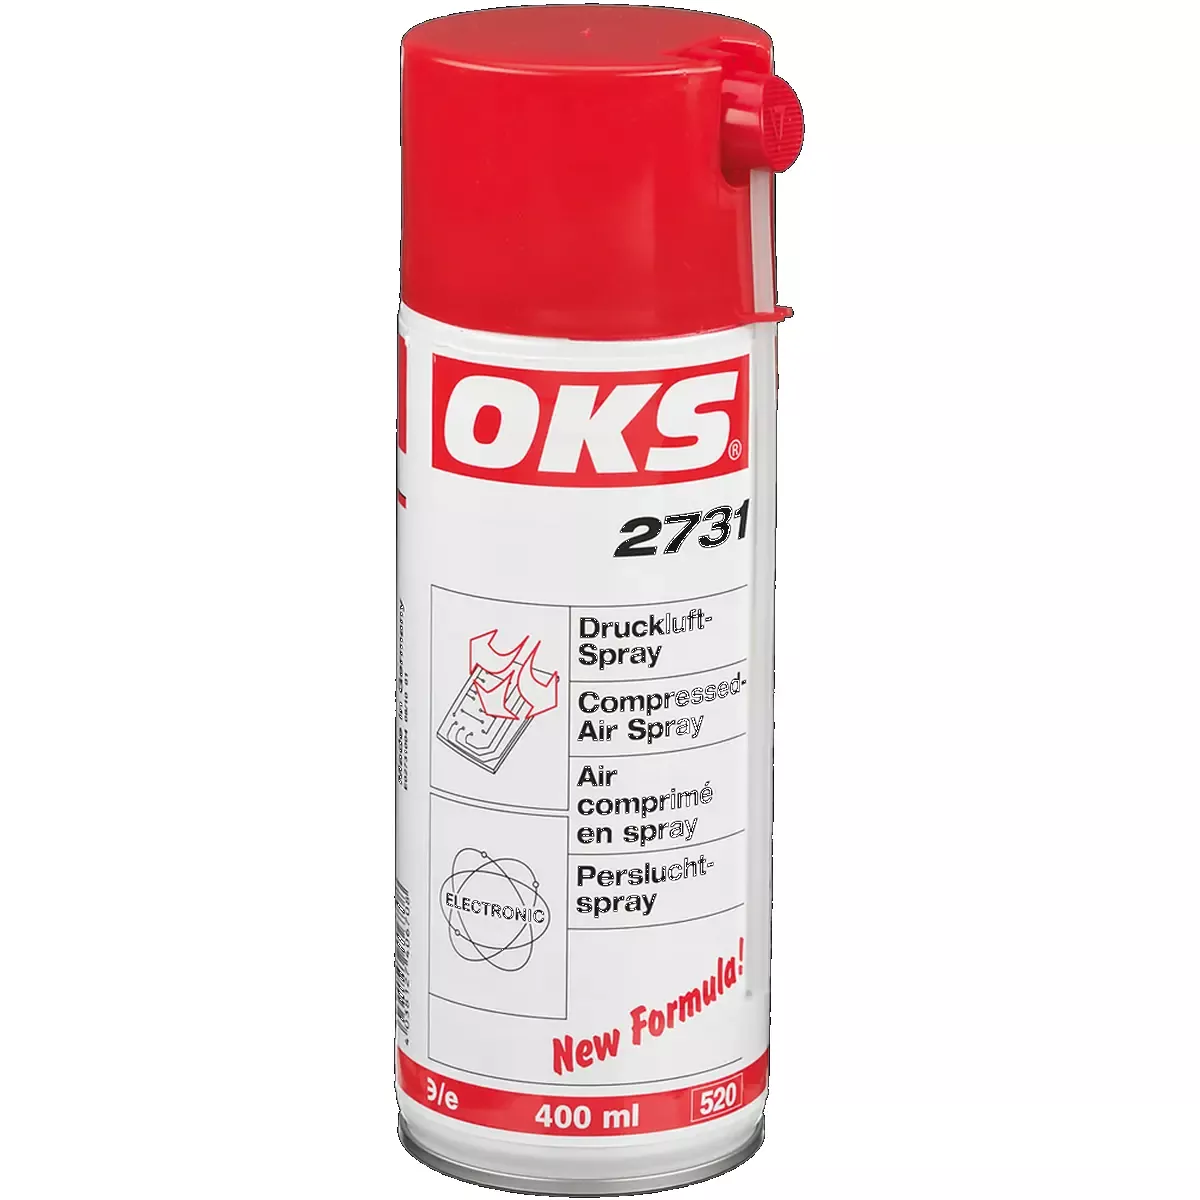 Druckluft-Spray OKS 2731